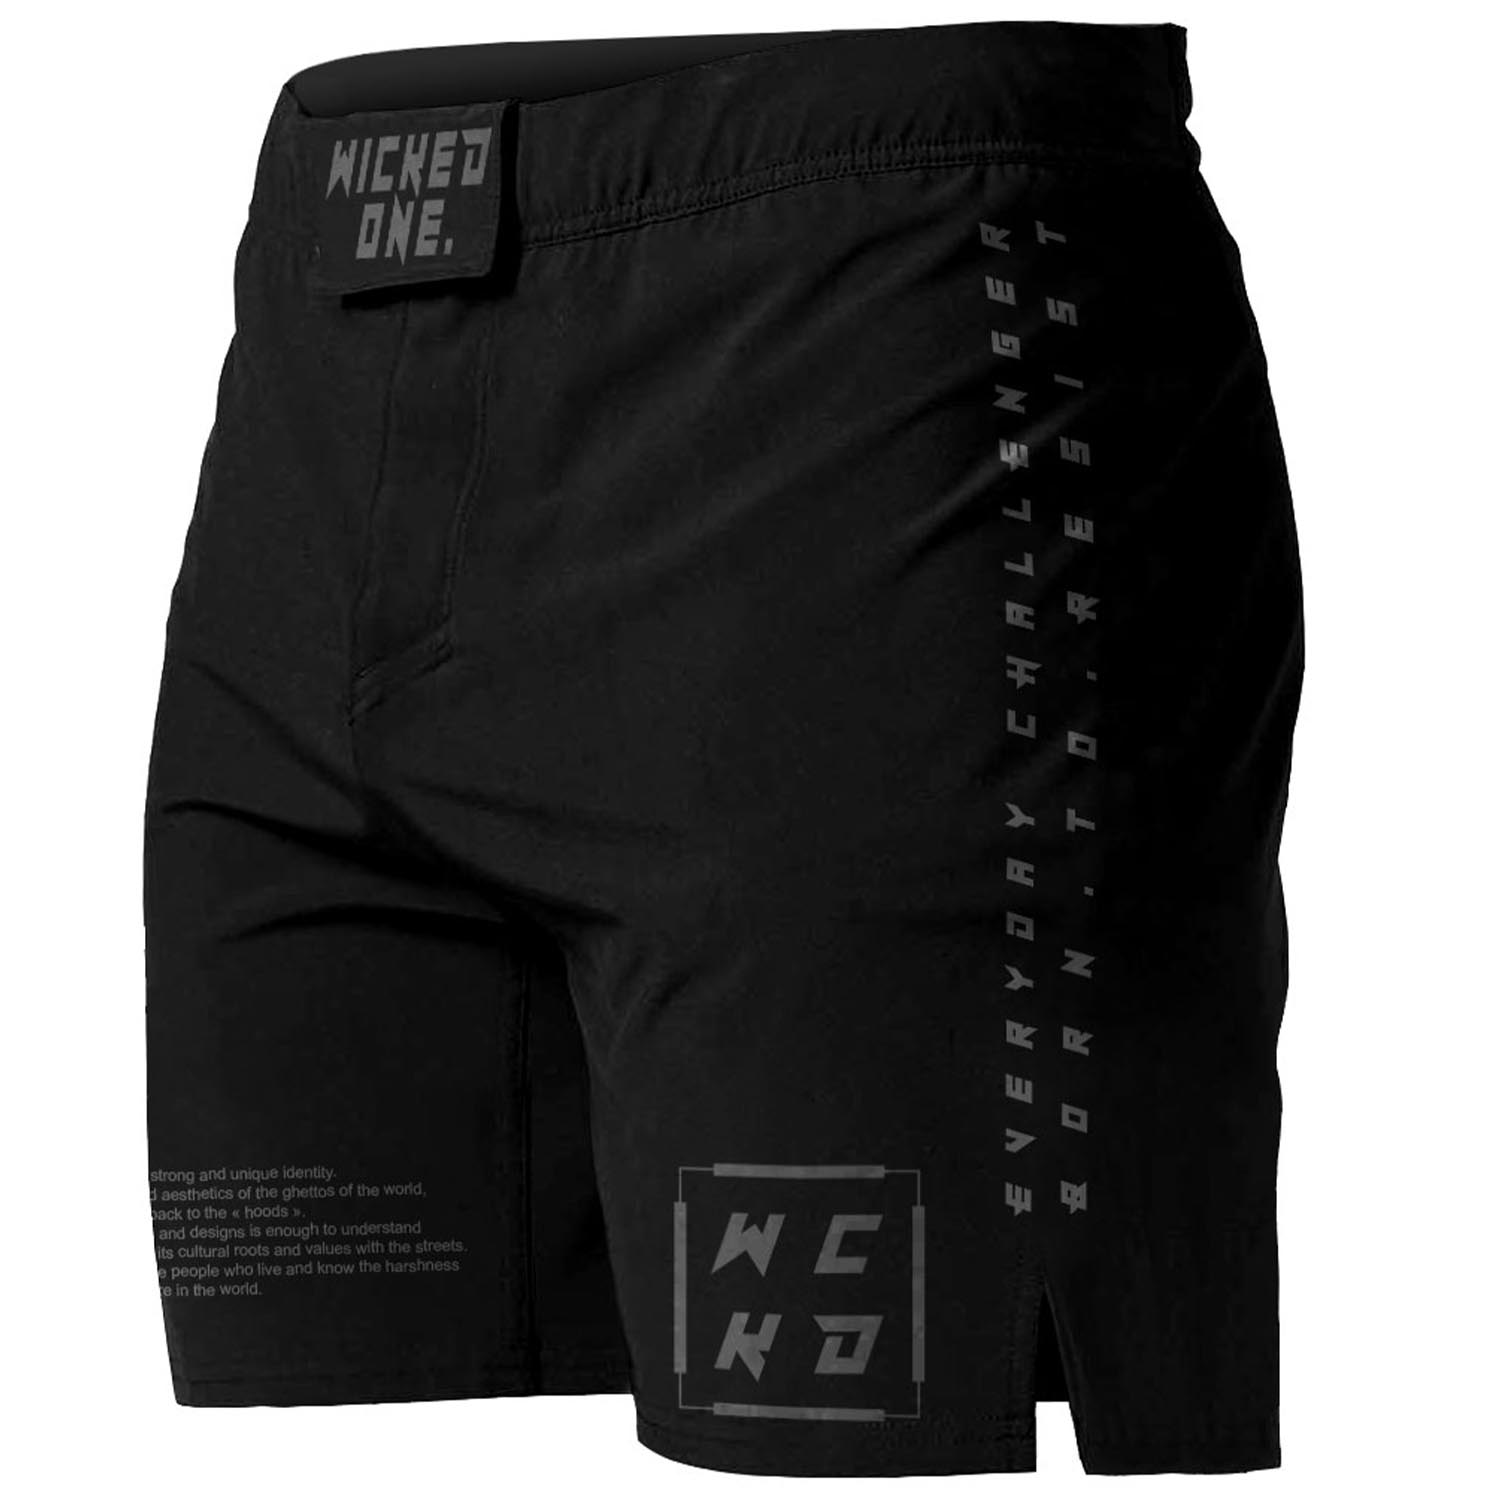 Wicked One Training Shorts, Score, black, XL